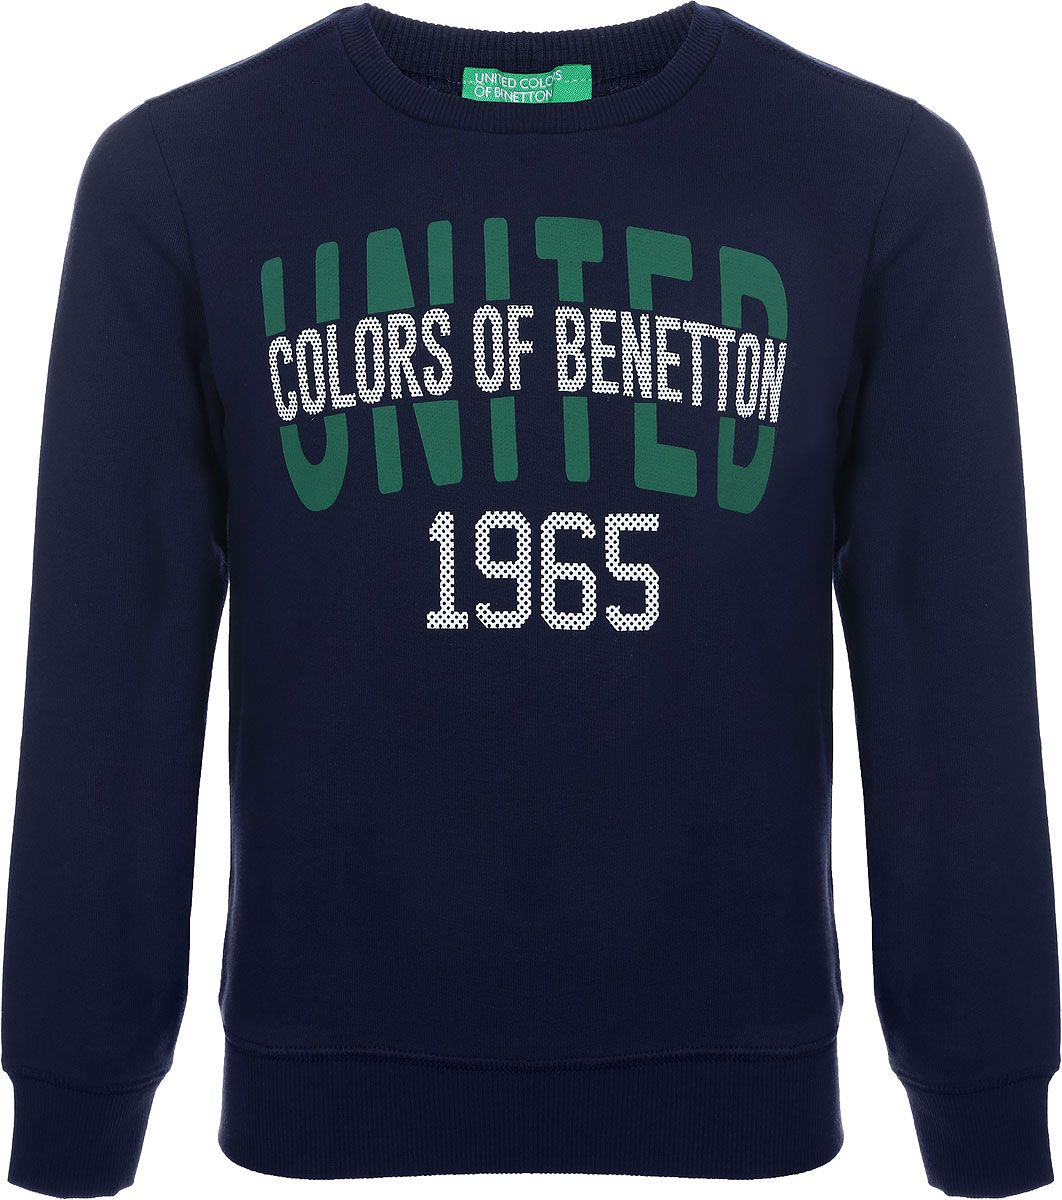    United Colors of Benetton, : -. 3J68C13ZU_13C.  3XL (170)